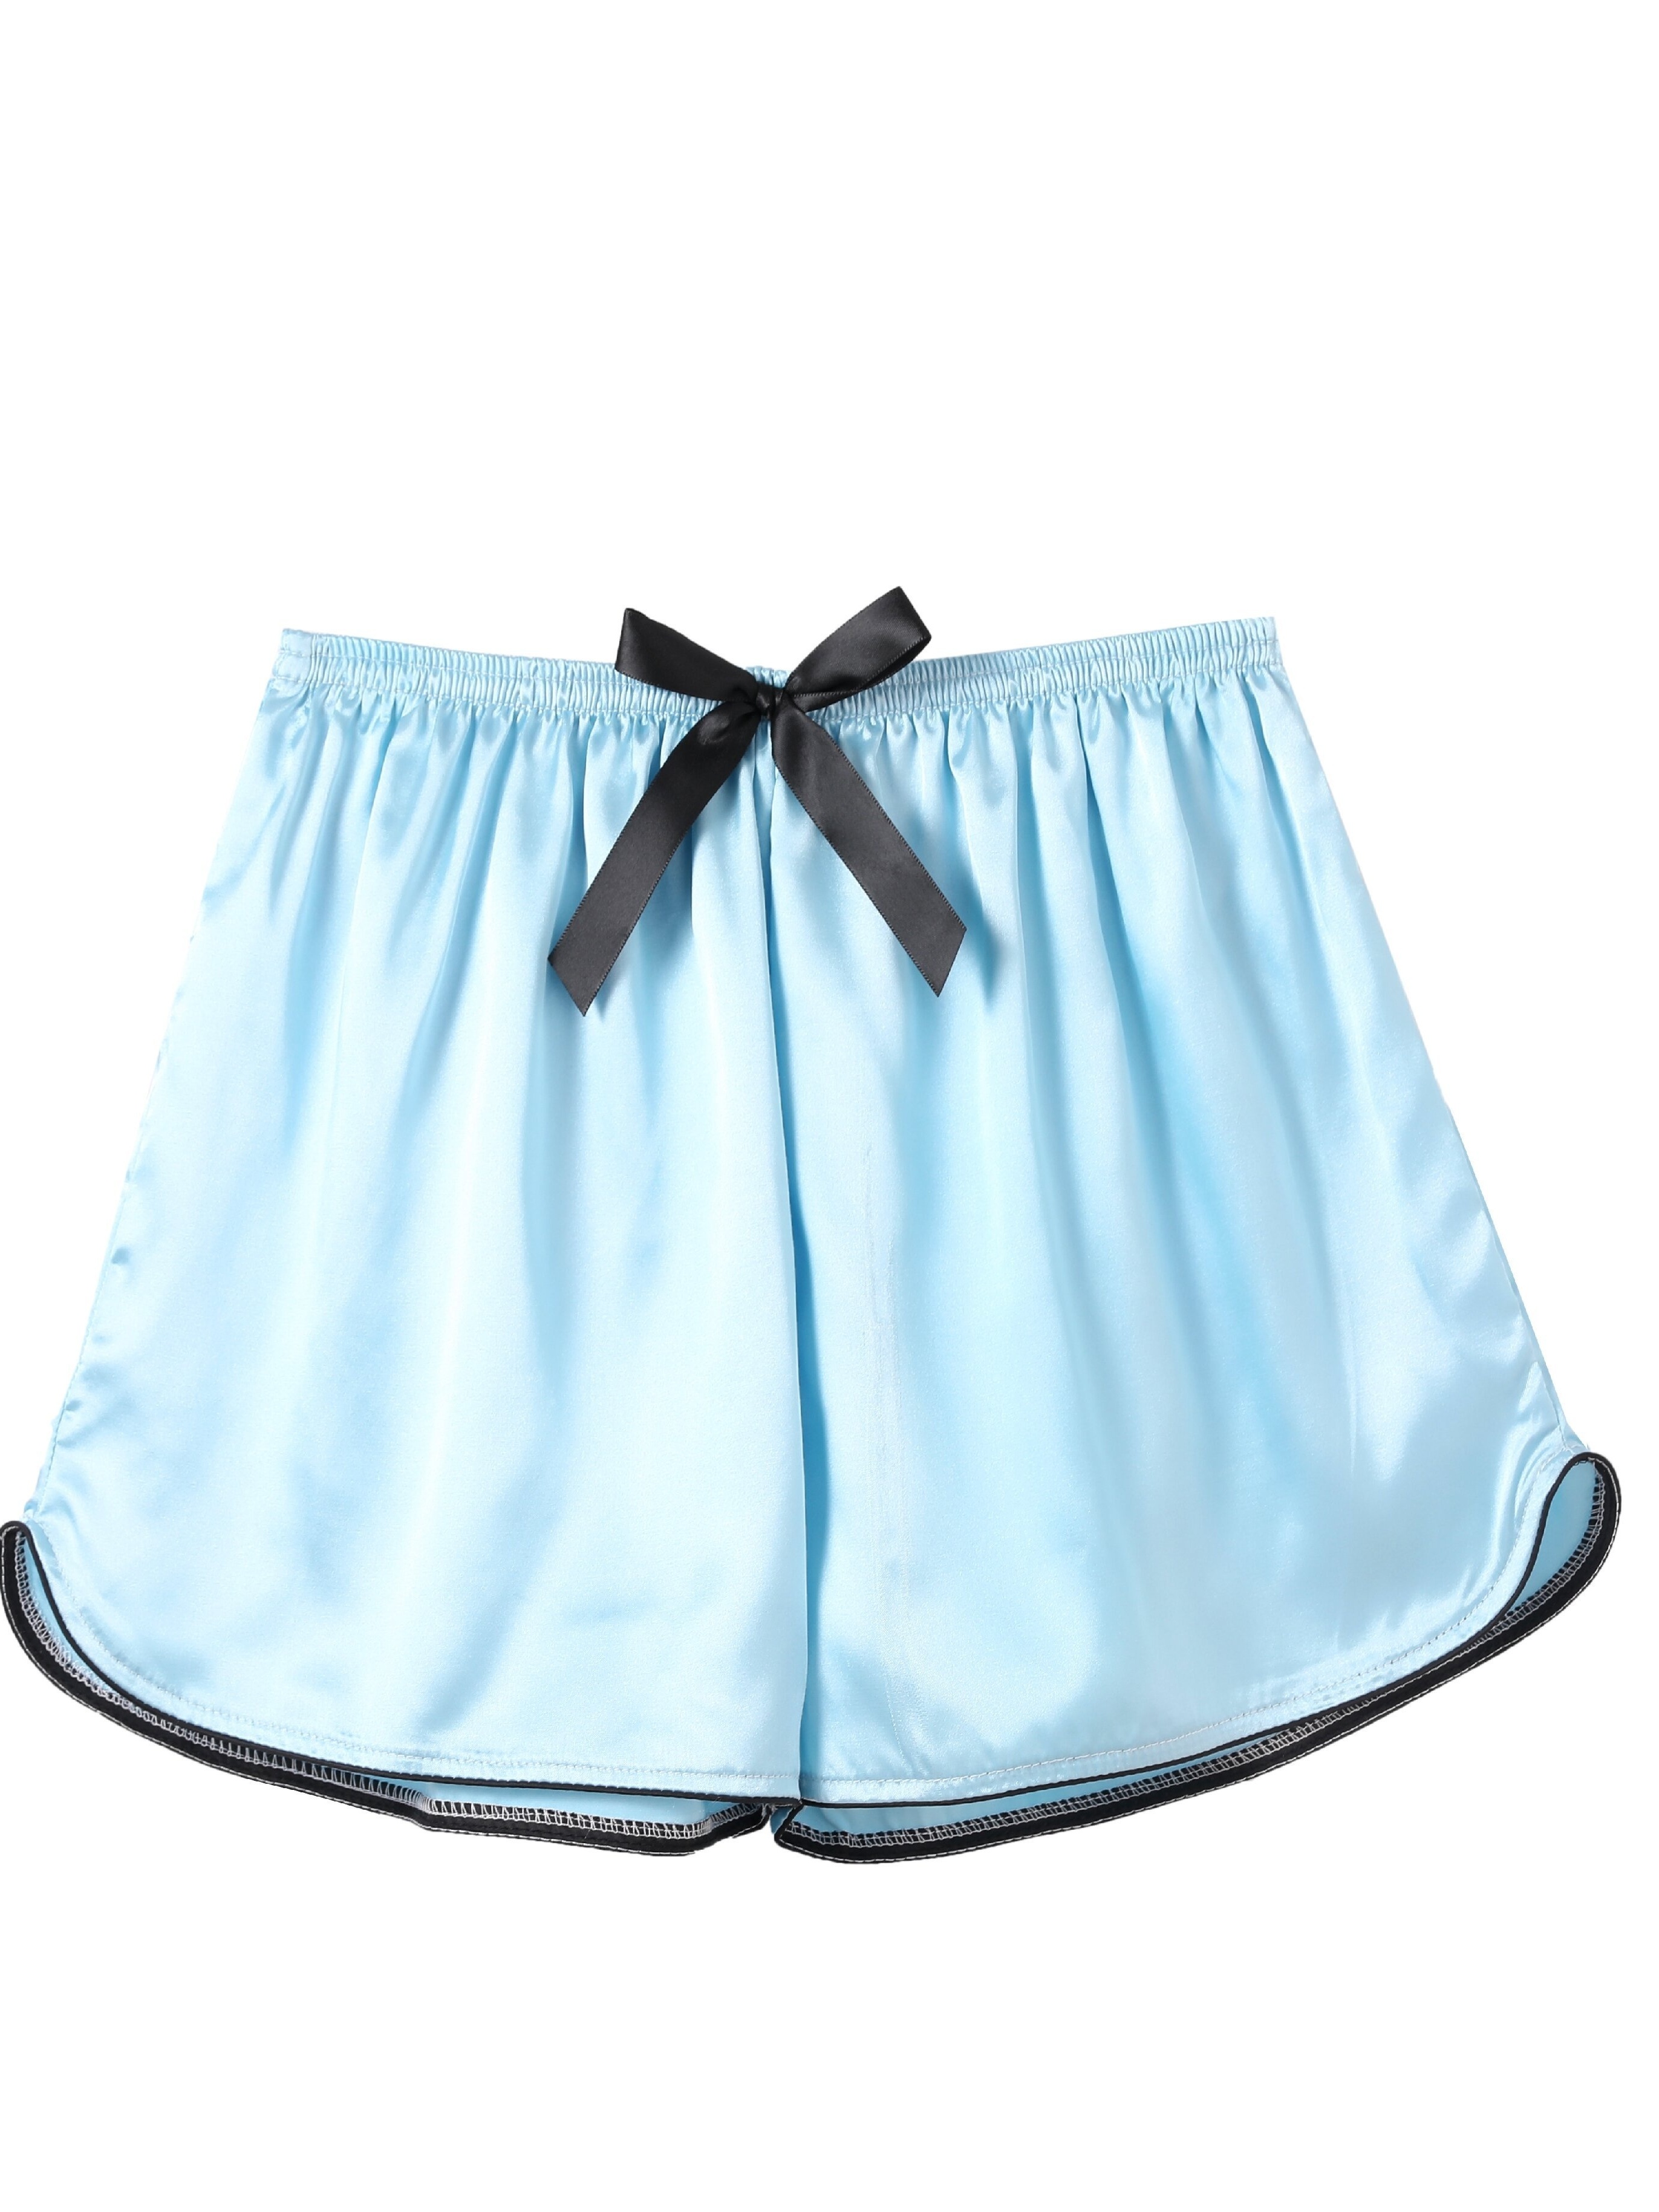 New Brand Women Pajama Shorts Soft Sleep Shorts Lightweight Printed Bow  Elastic Waist Lounge Bottoms pantalones cortos - AliExpress